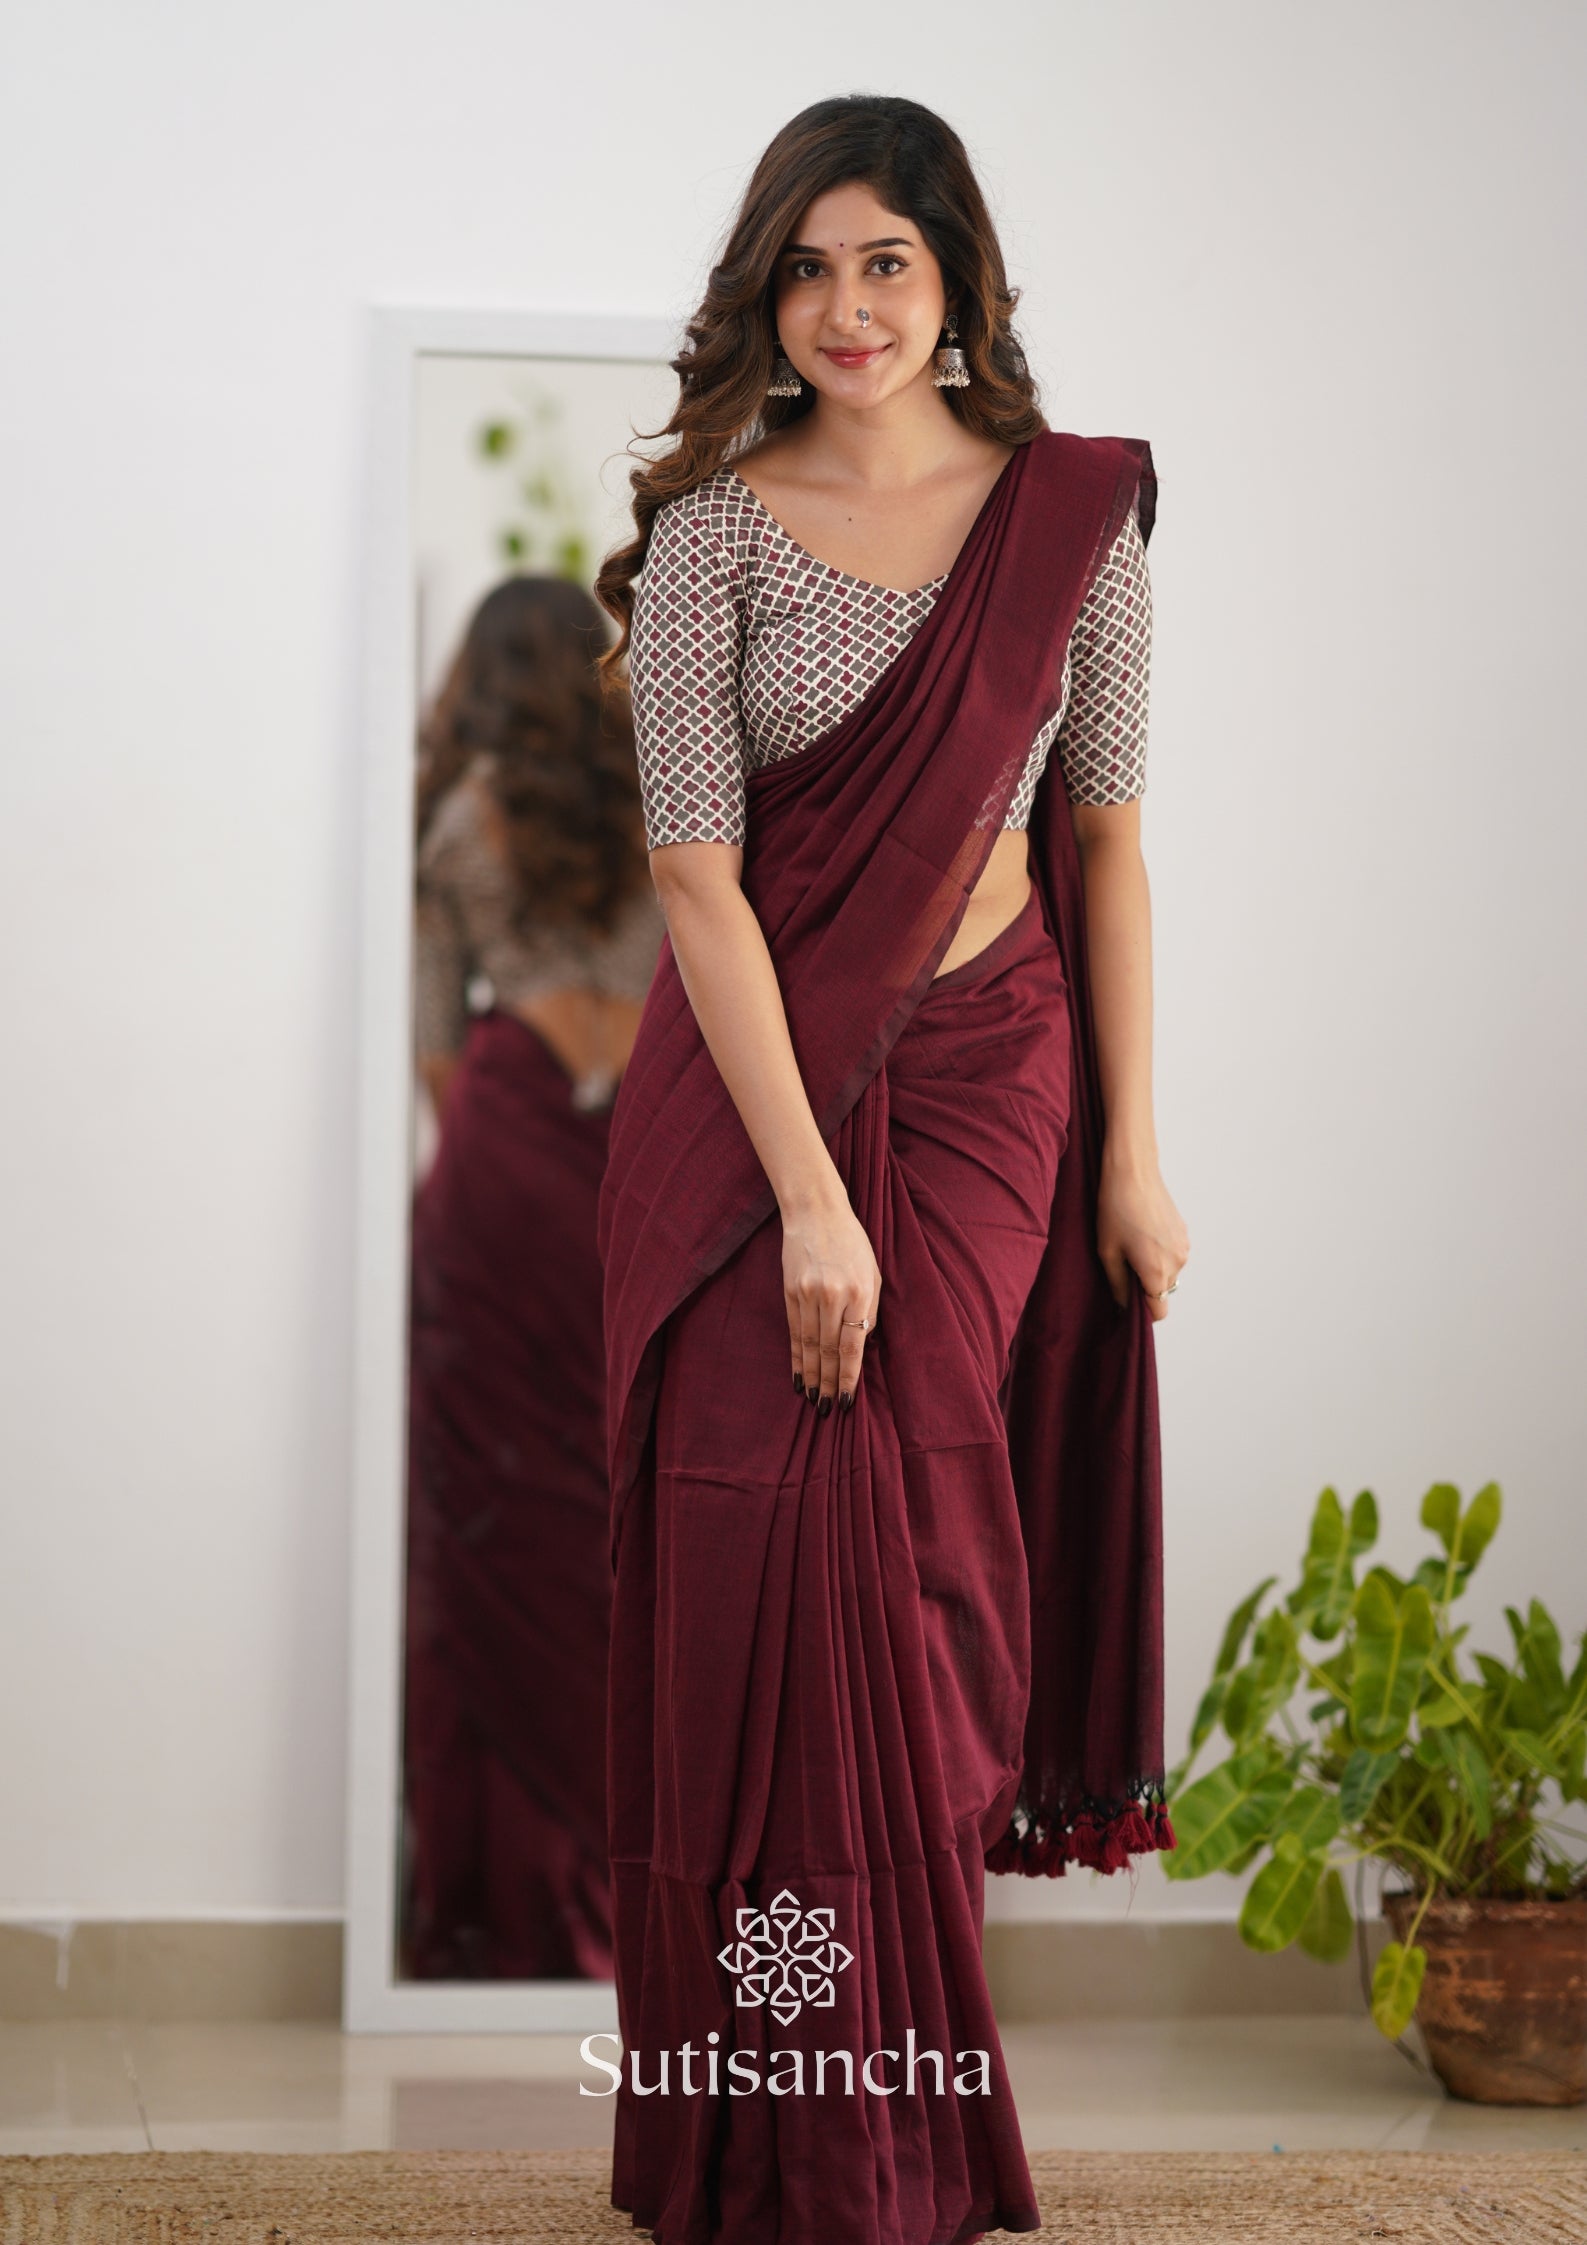 Sutisancha Maroon Handloom Cotton Saree Saree With Designer Blouse